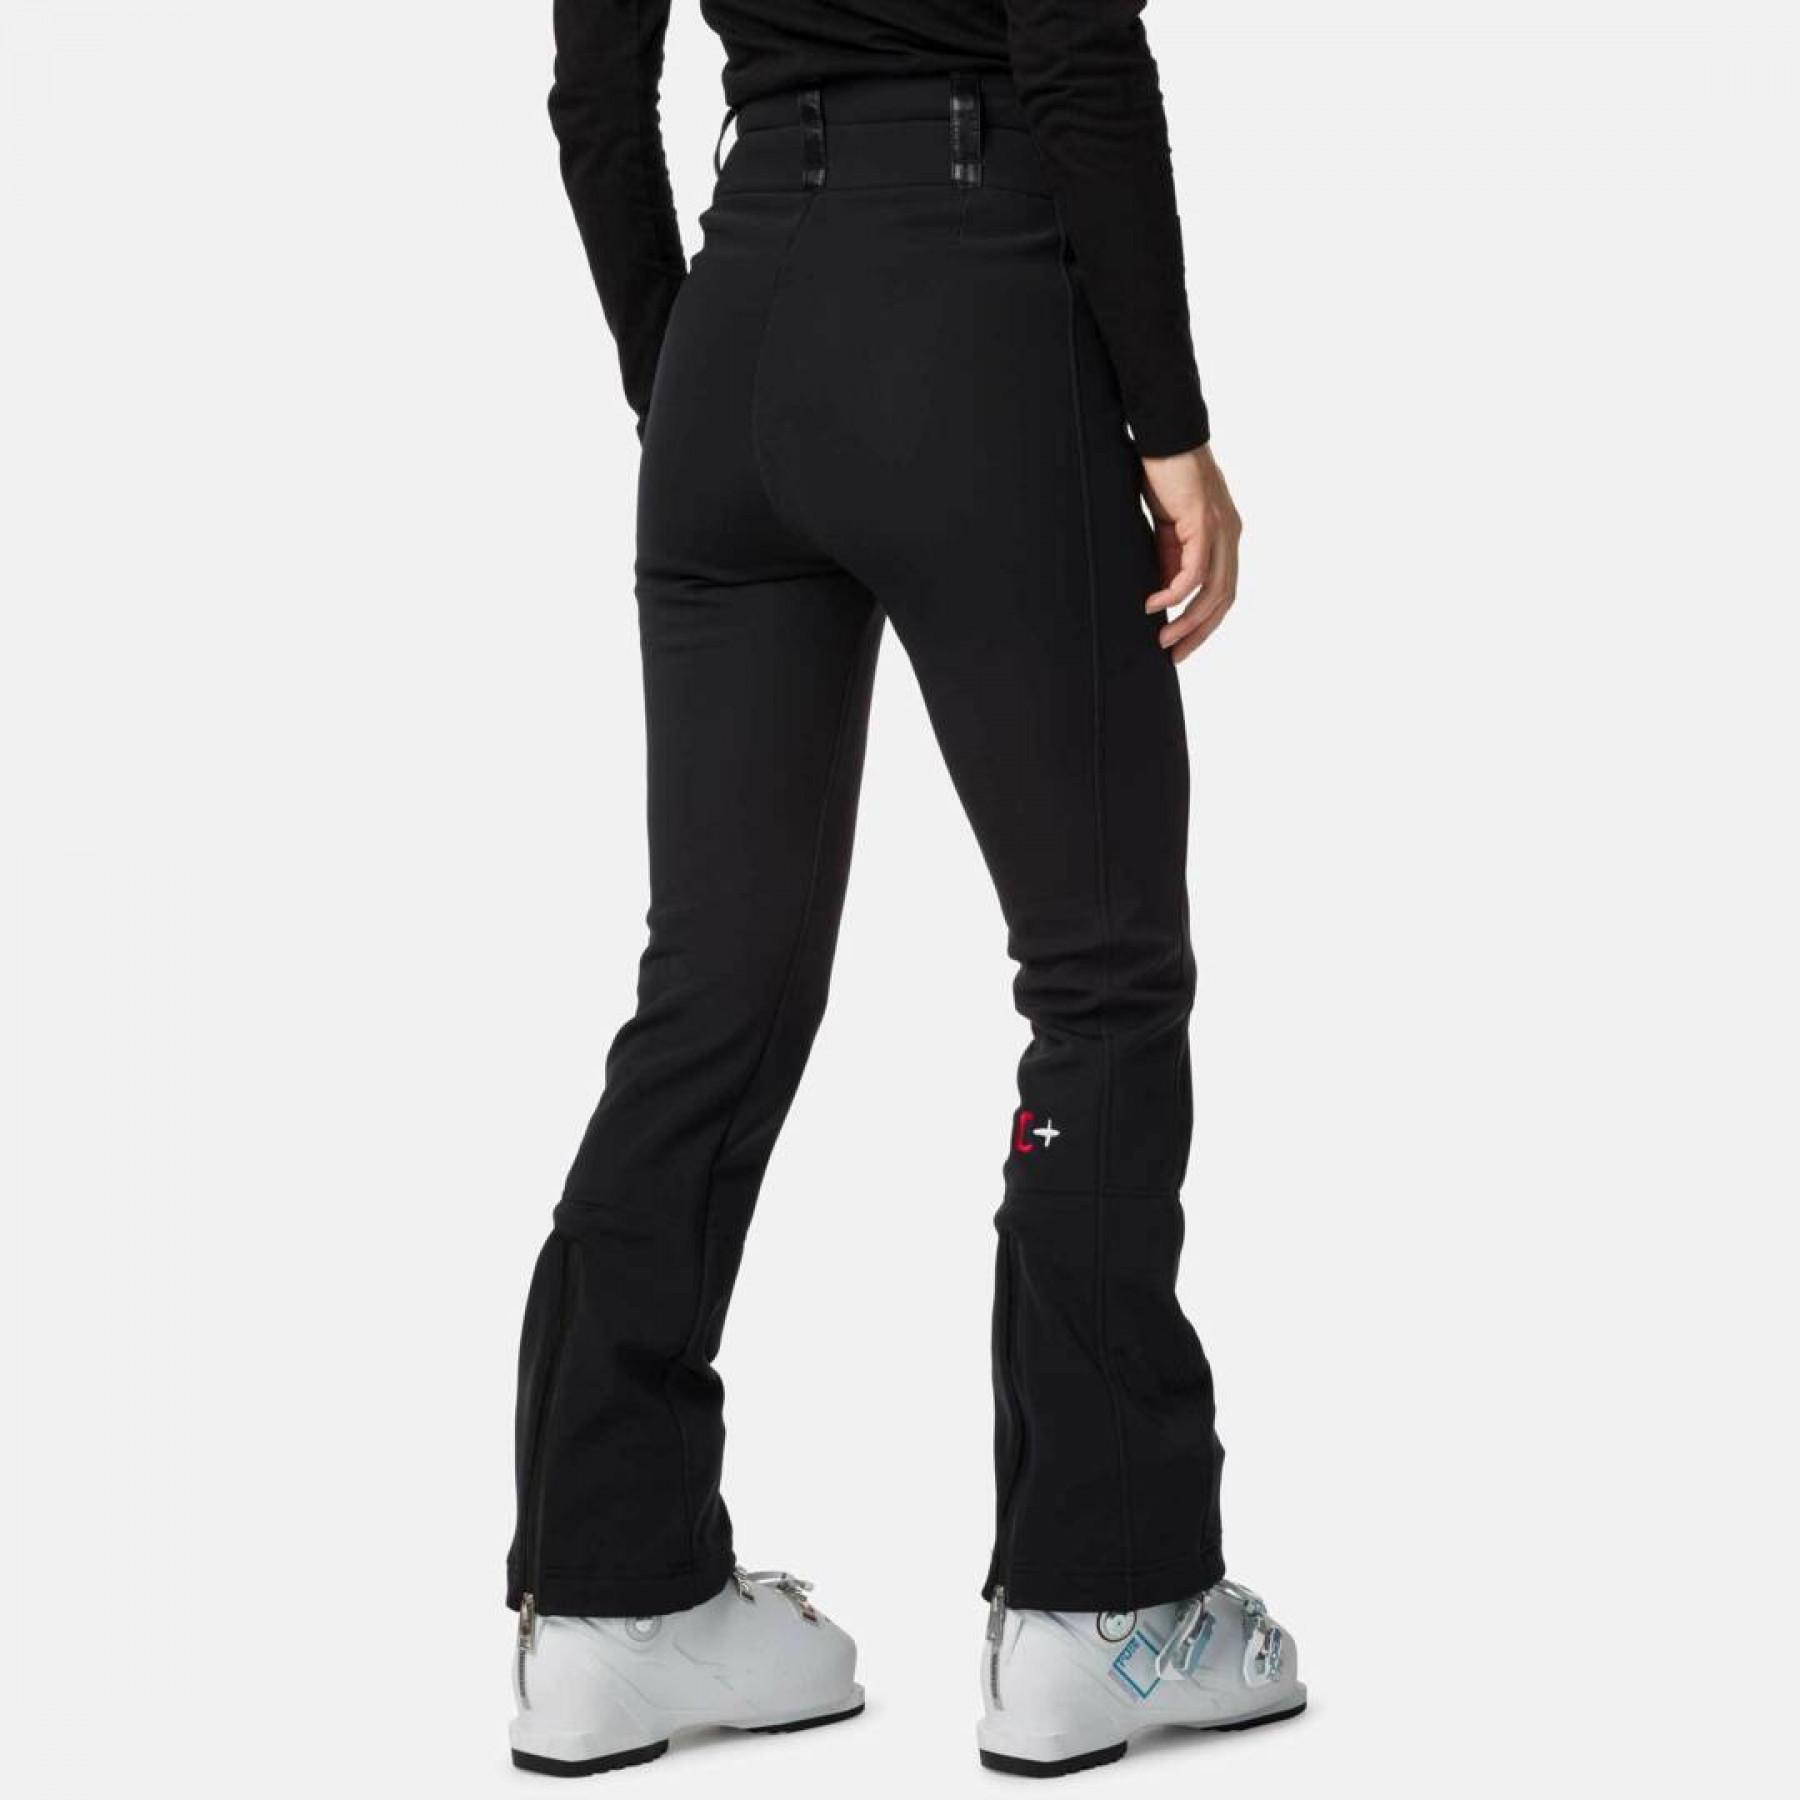 Pantalones de esquí para mujer Rossignol Dami Soft PT